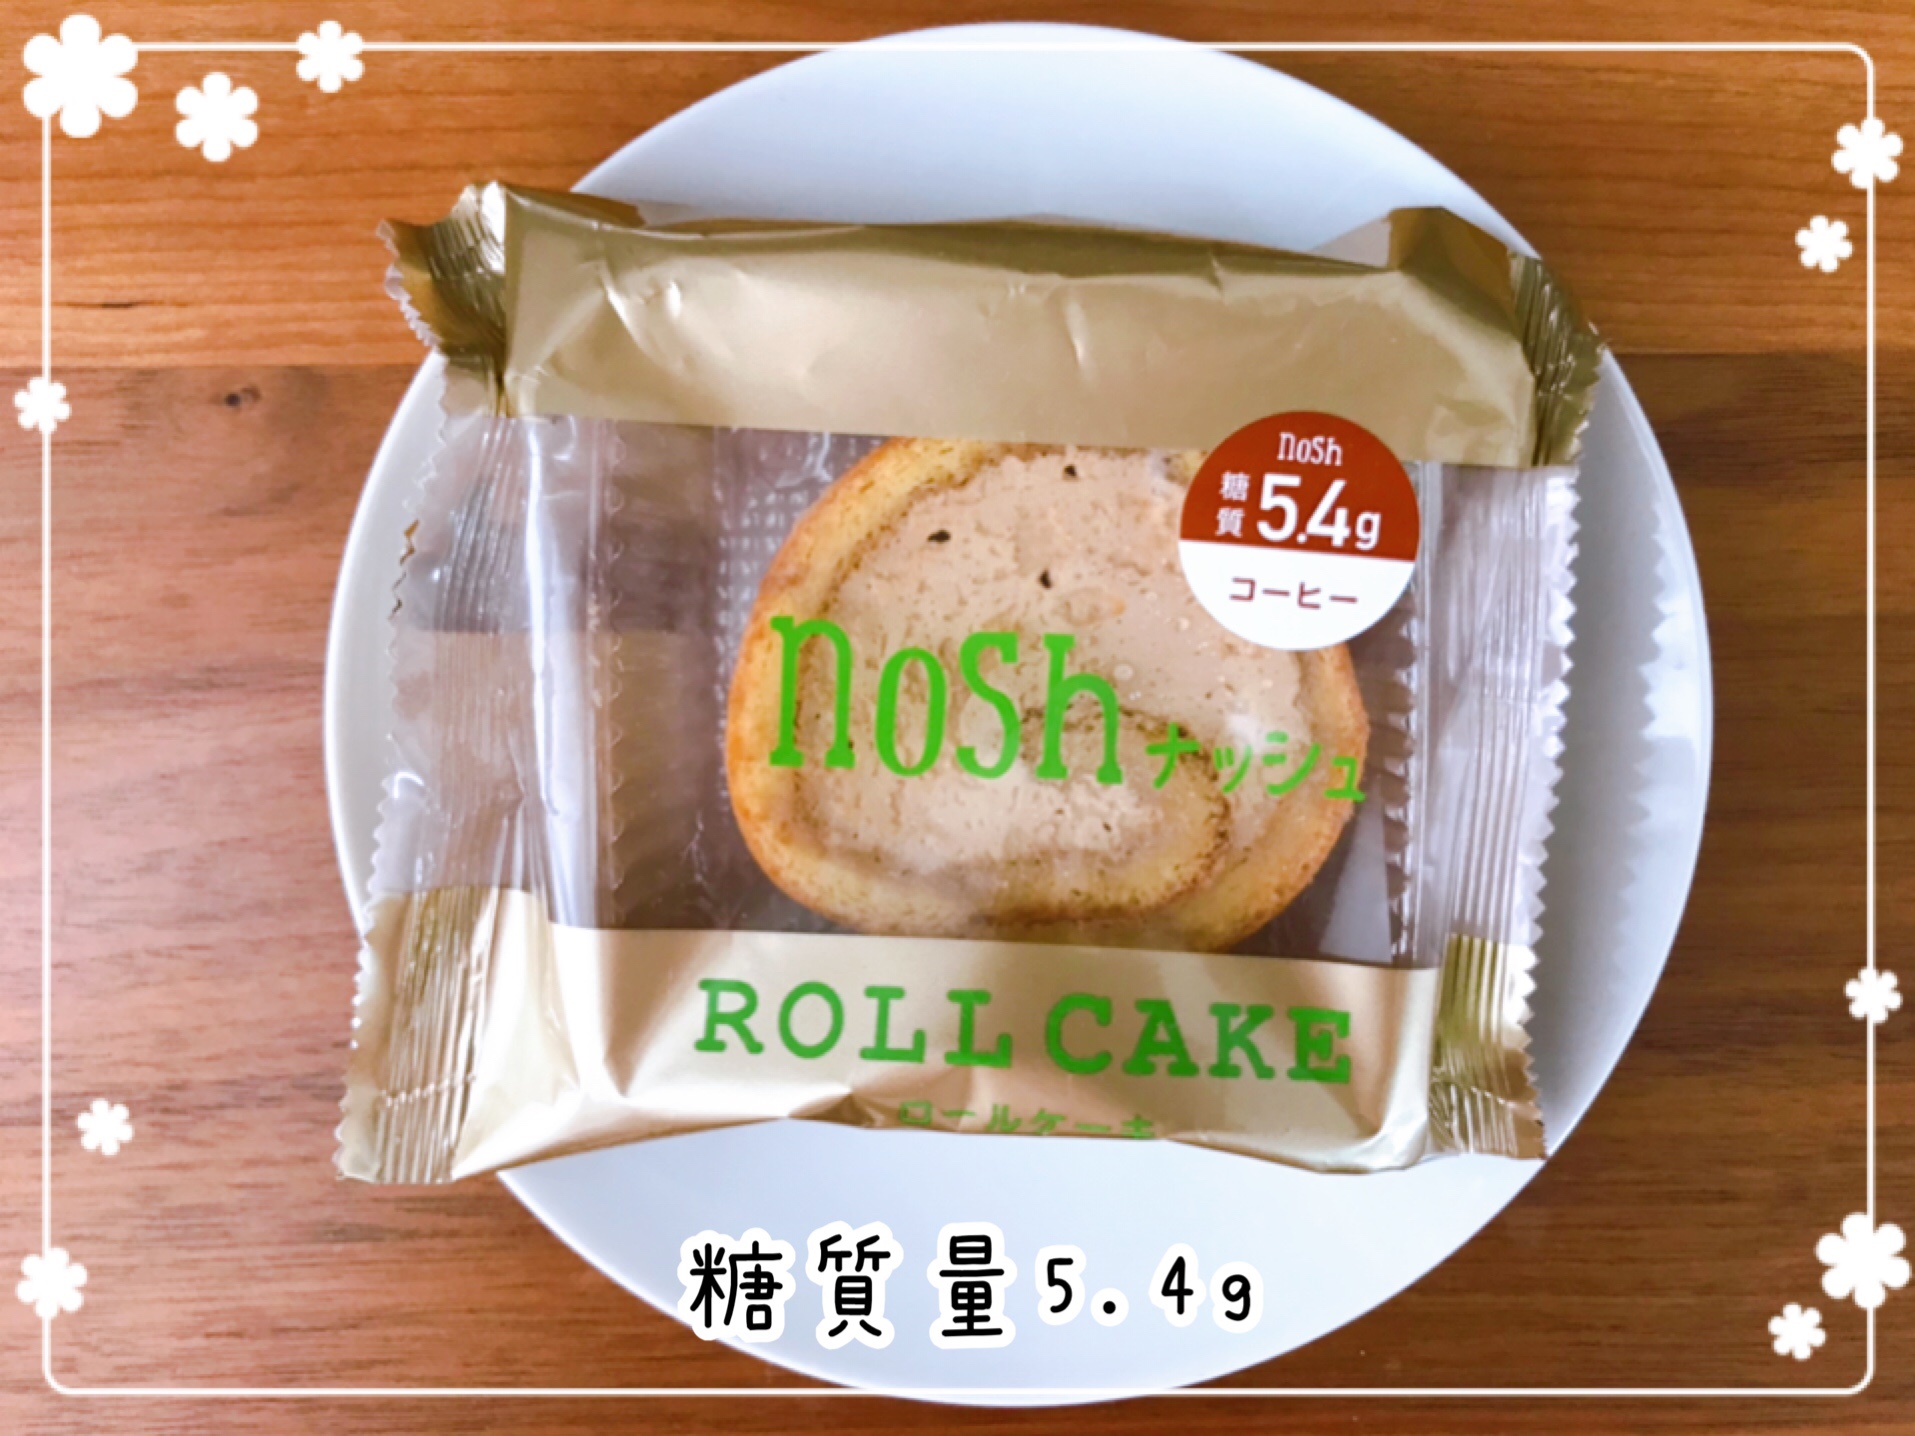 nosh(ナッシュ)ロールケーキの口コミ